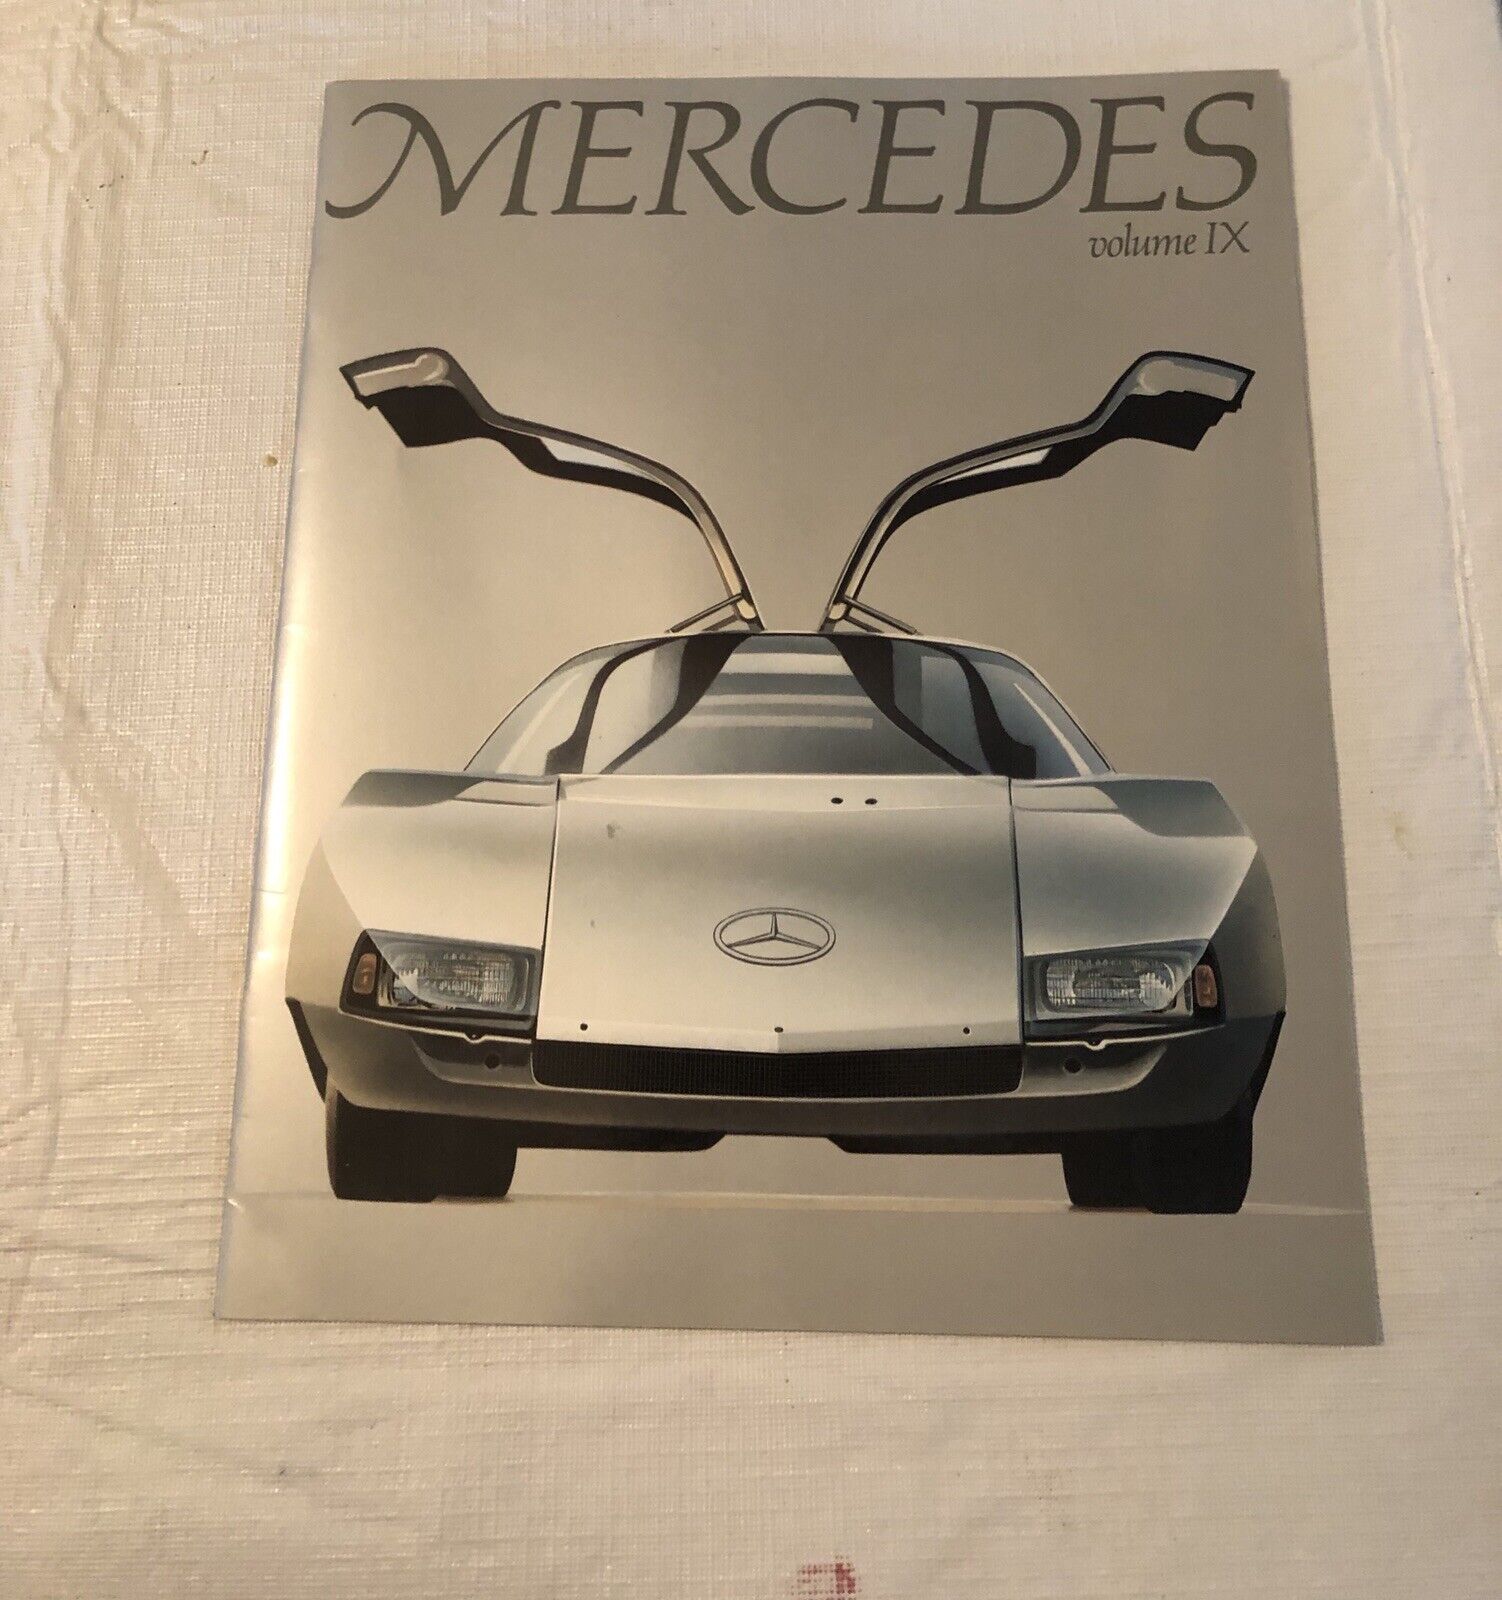 *Mercedes Volume IX Magazine 1983  (Winged Doors)